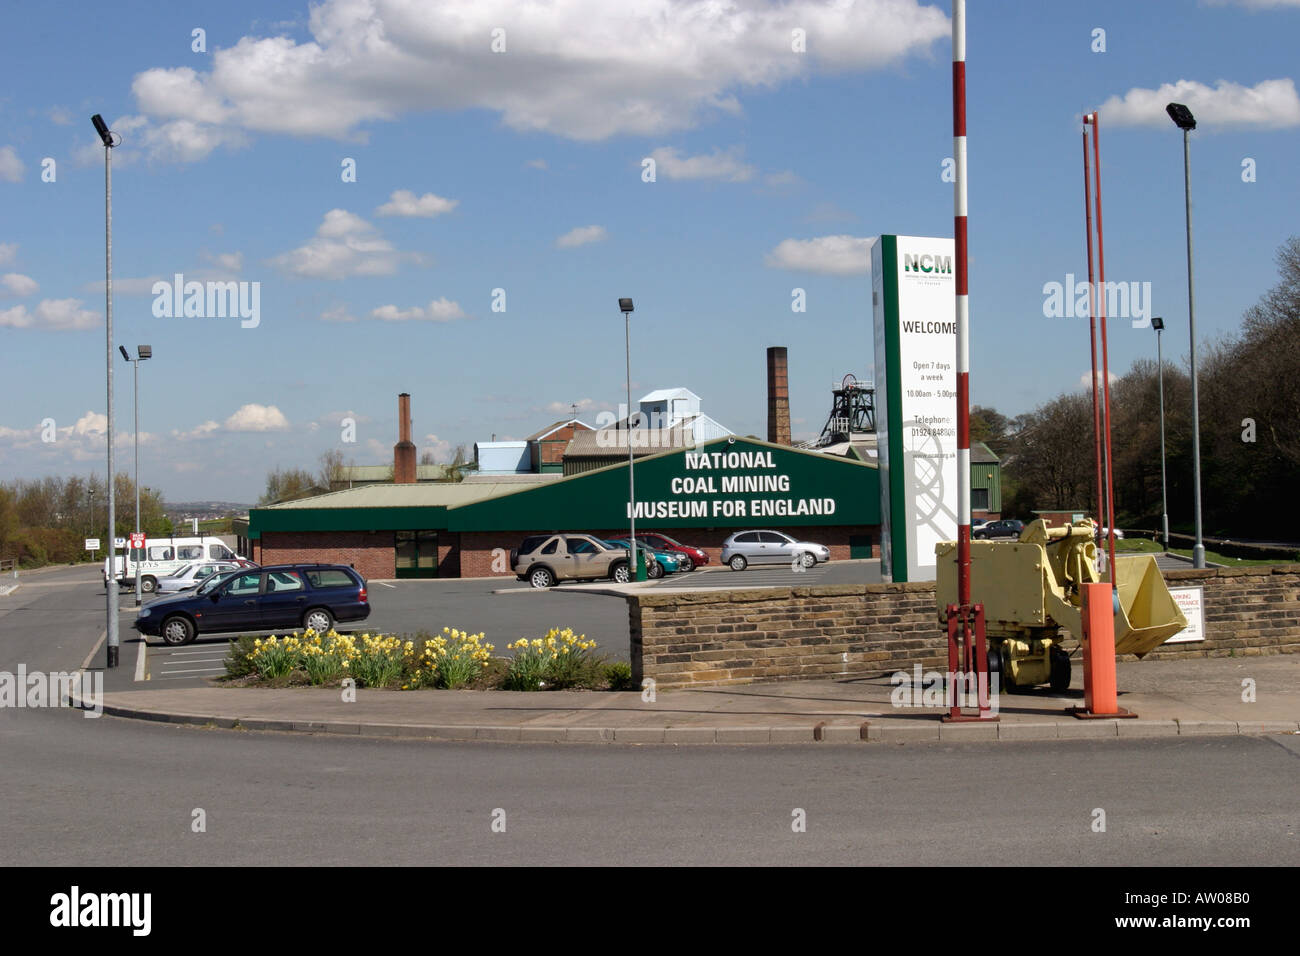 National Coal Mining Museum per Inghilterra Wakefield West Yorkshire Foto Stock